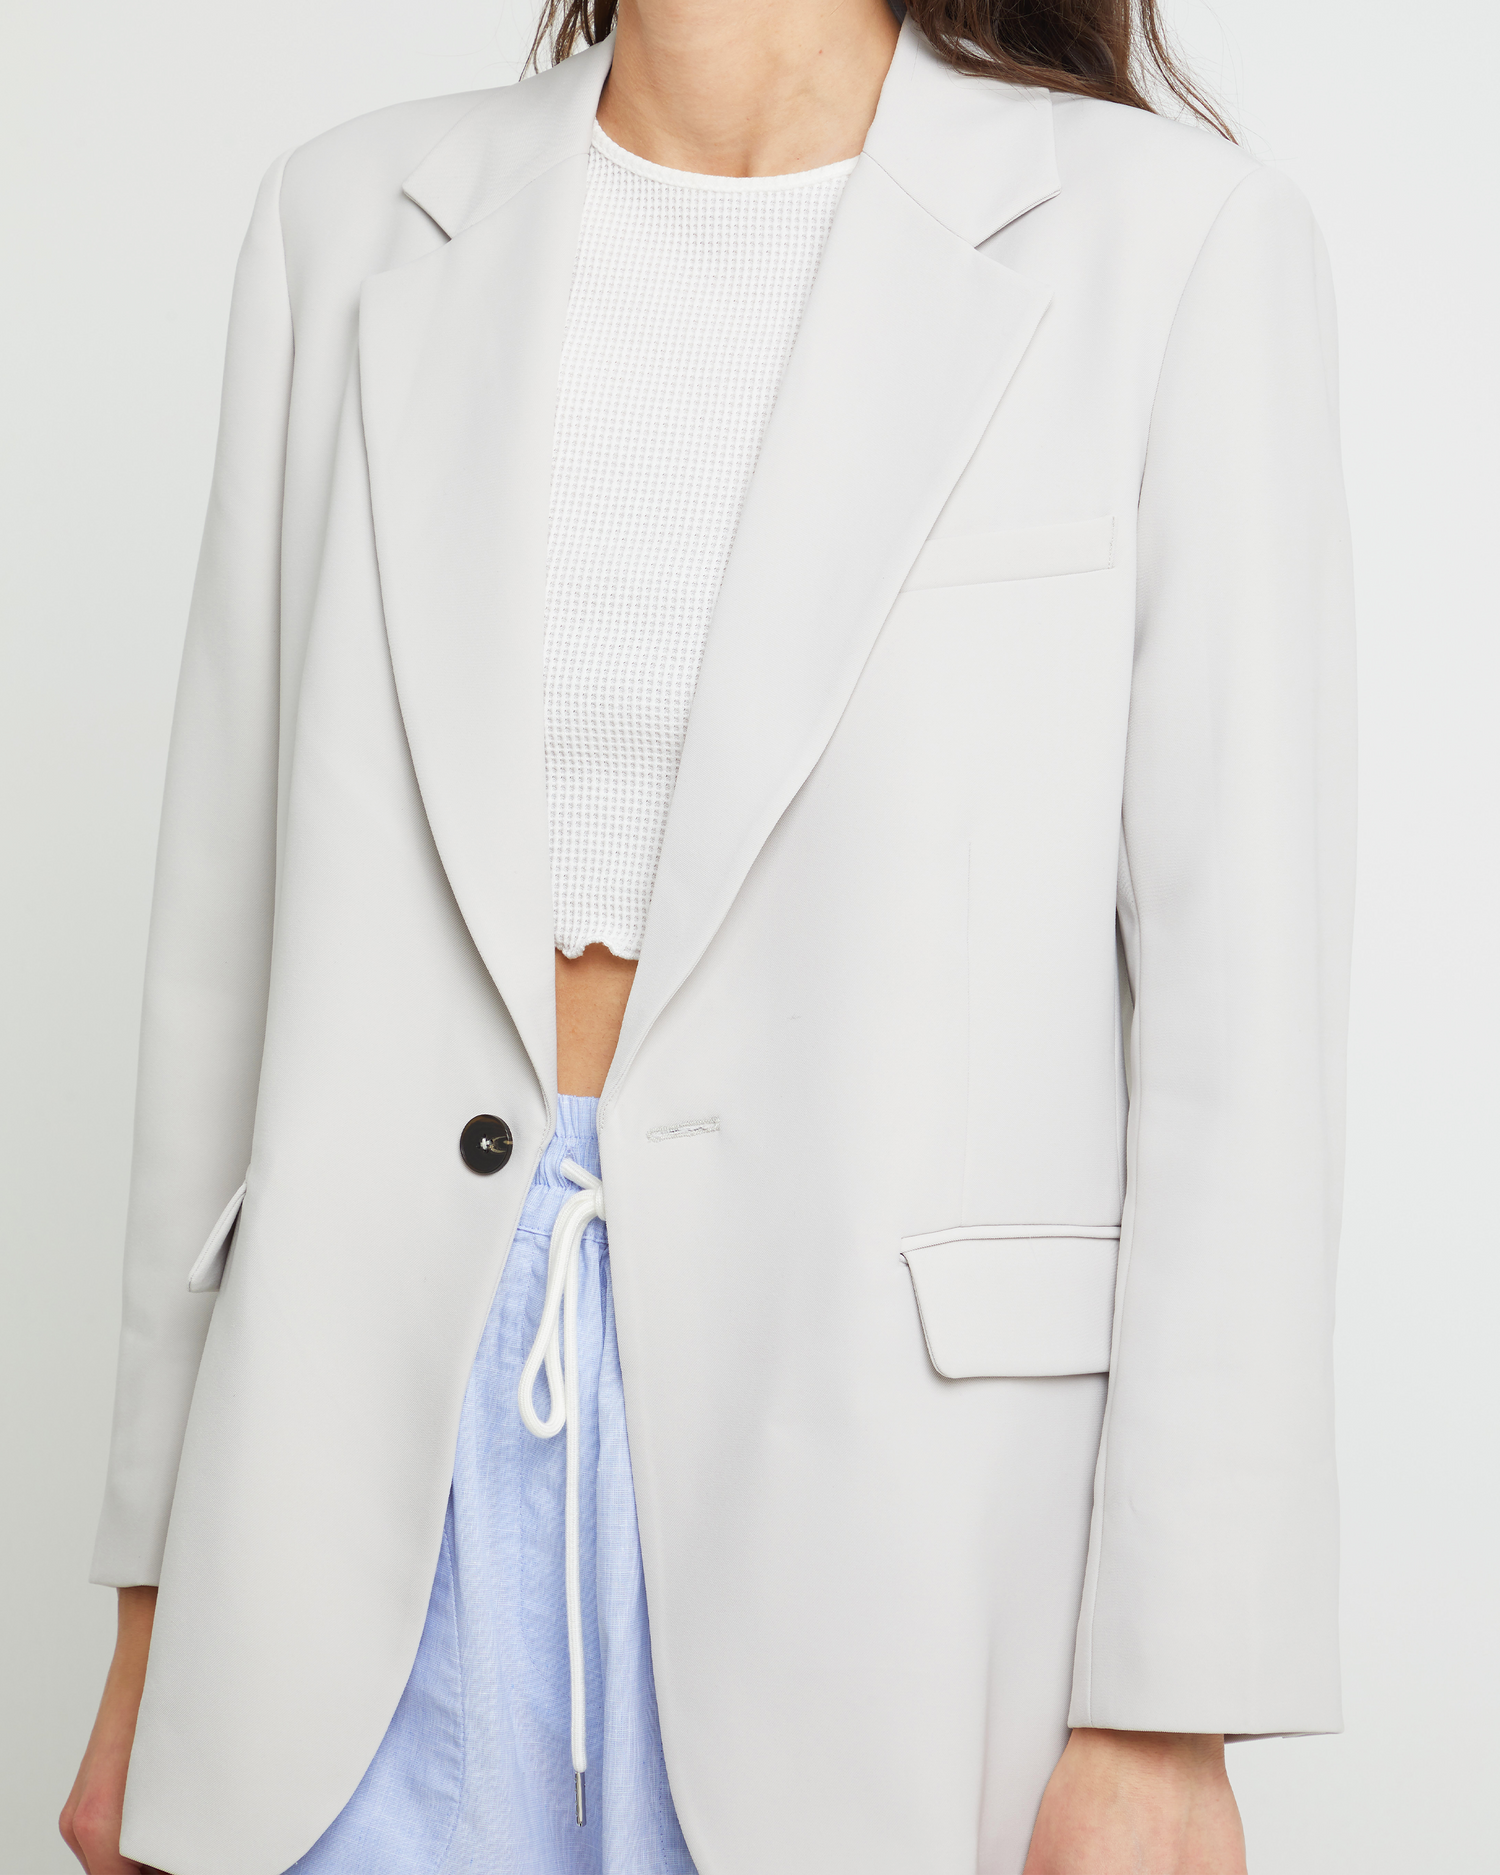 Sixth image of Larsen Oversized Blazer, a white blazer, front button, long sleeve, jacket